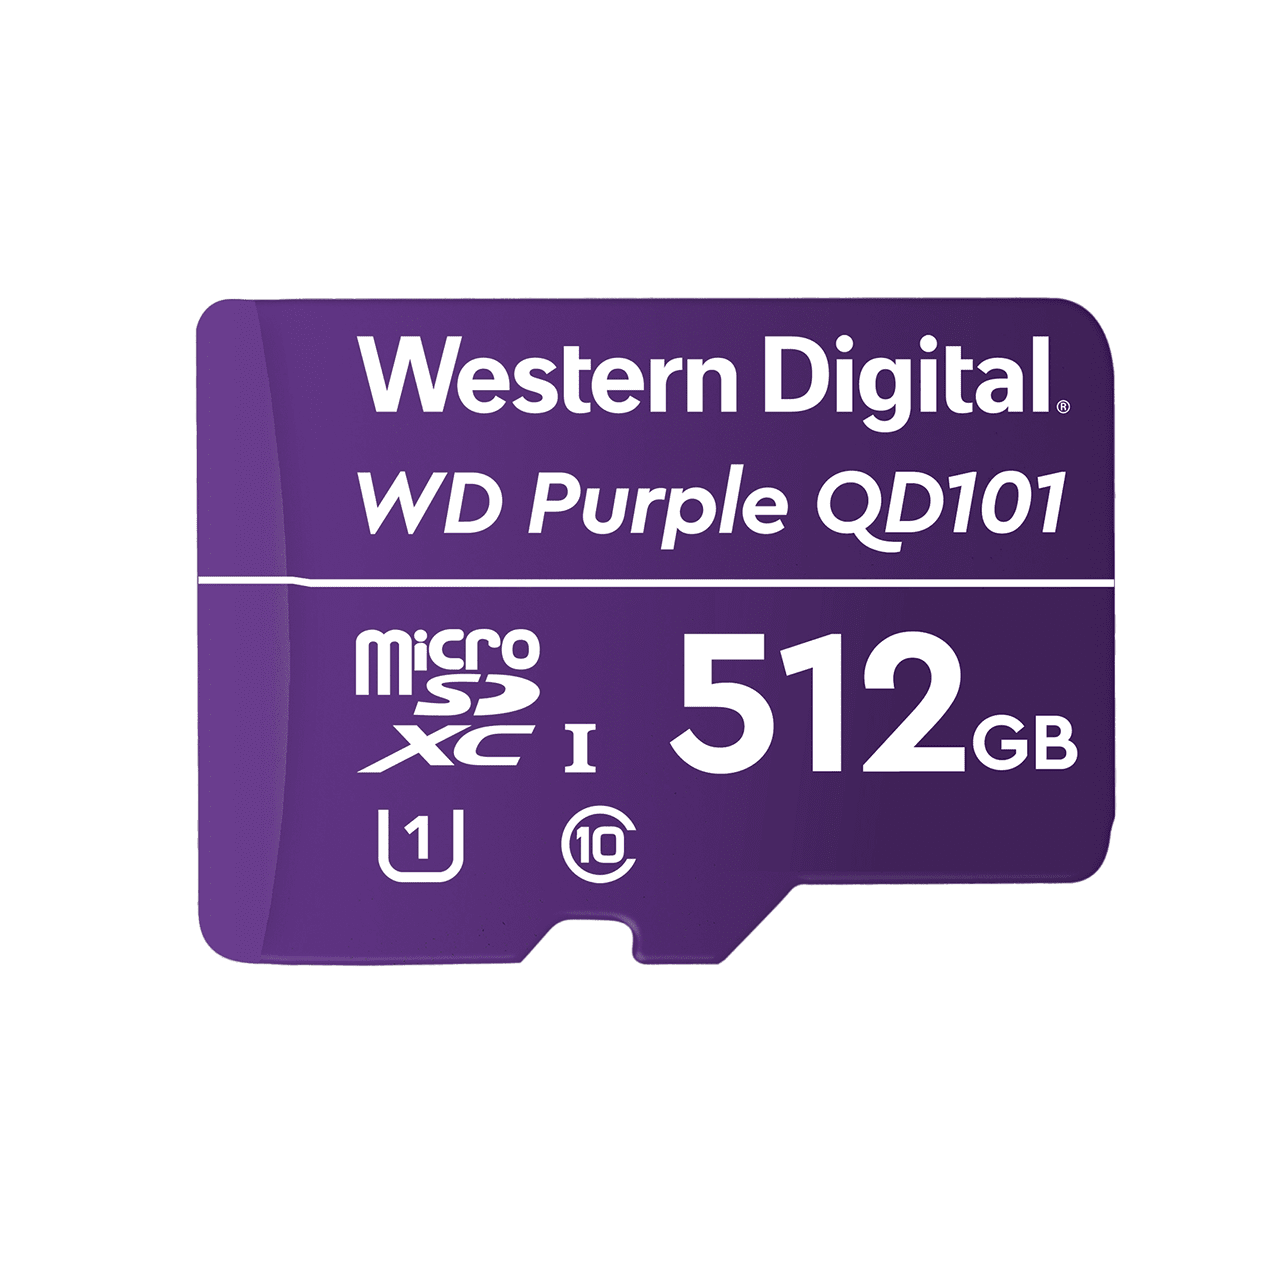 wd-purple-microsd-2020-front-512gb.png.thumb.1280.1280